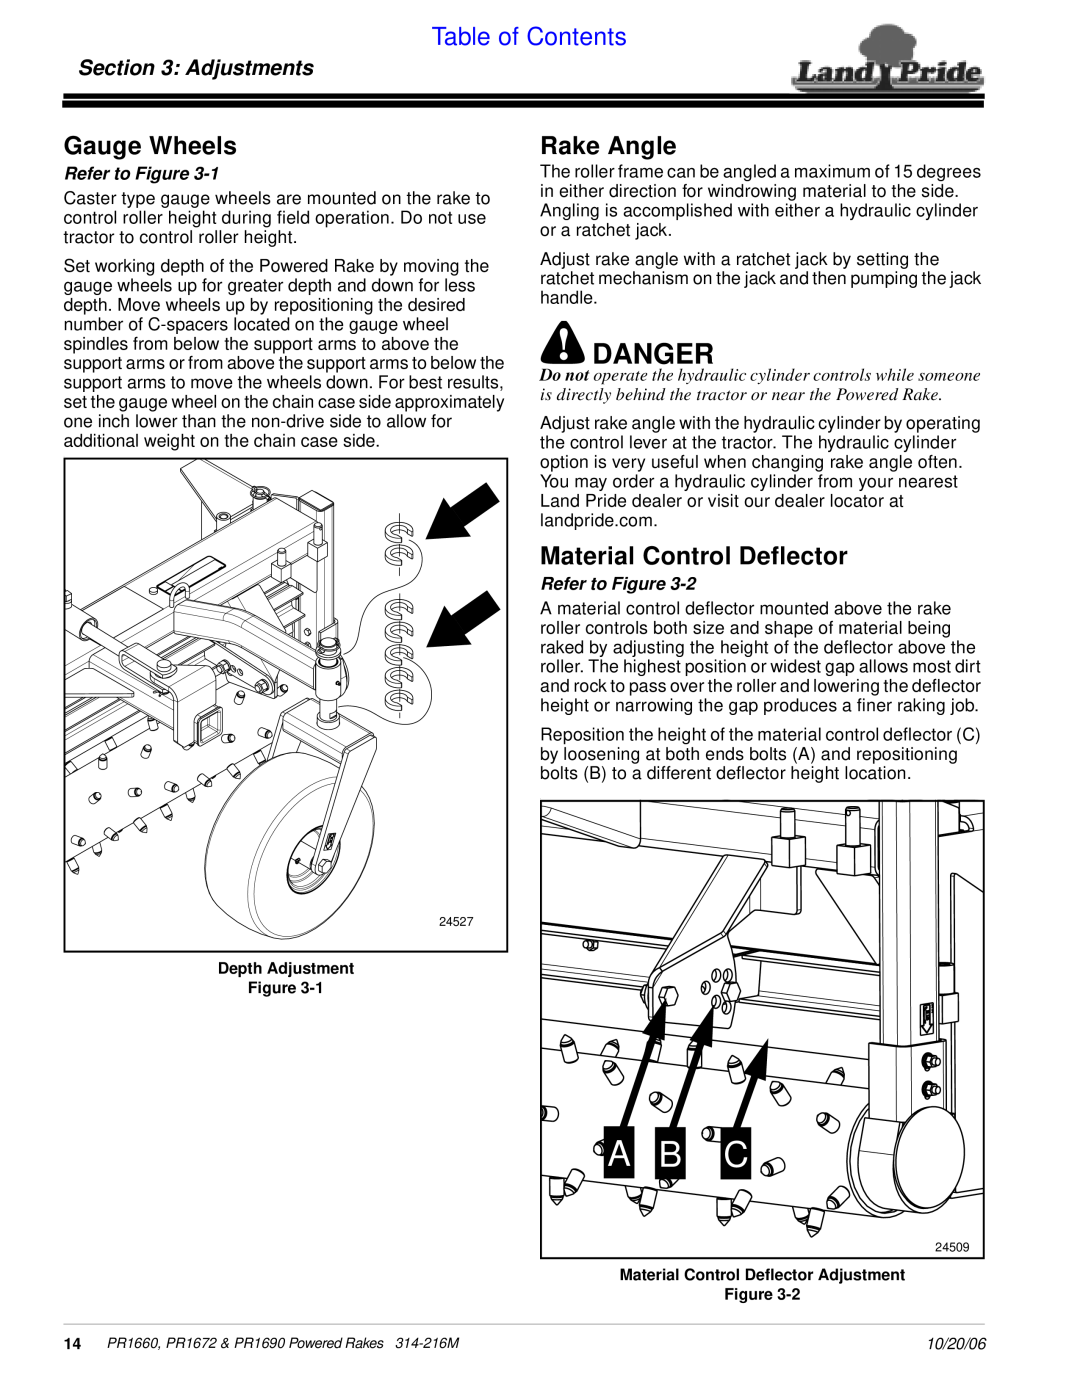 Land Pride PR1672 manual Gauge Wheels, Rake Angle, Material Control Deflector, Adjustments, Danger, Table of Contents 